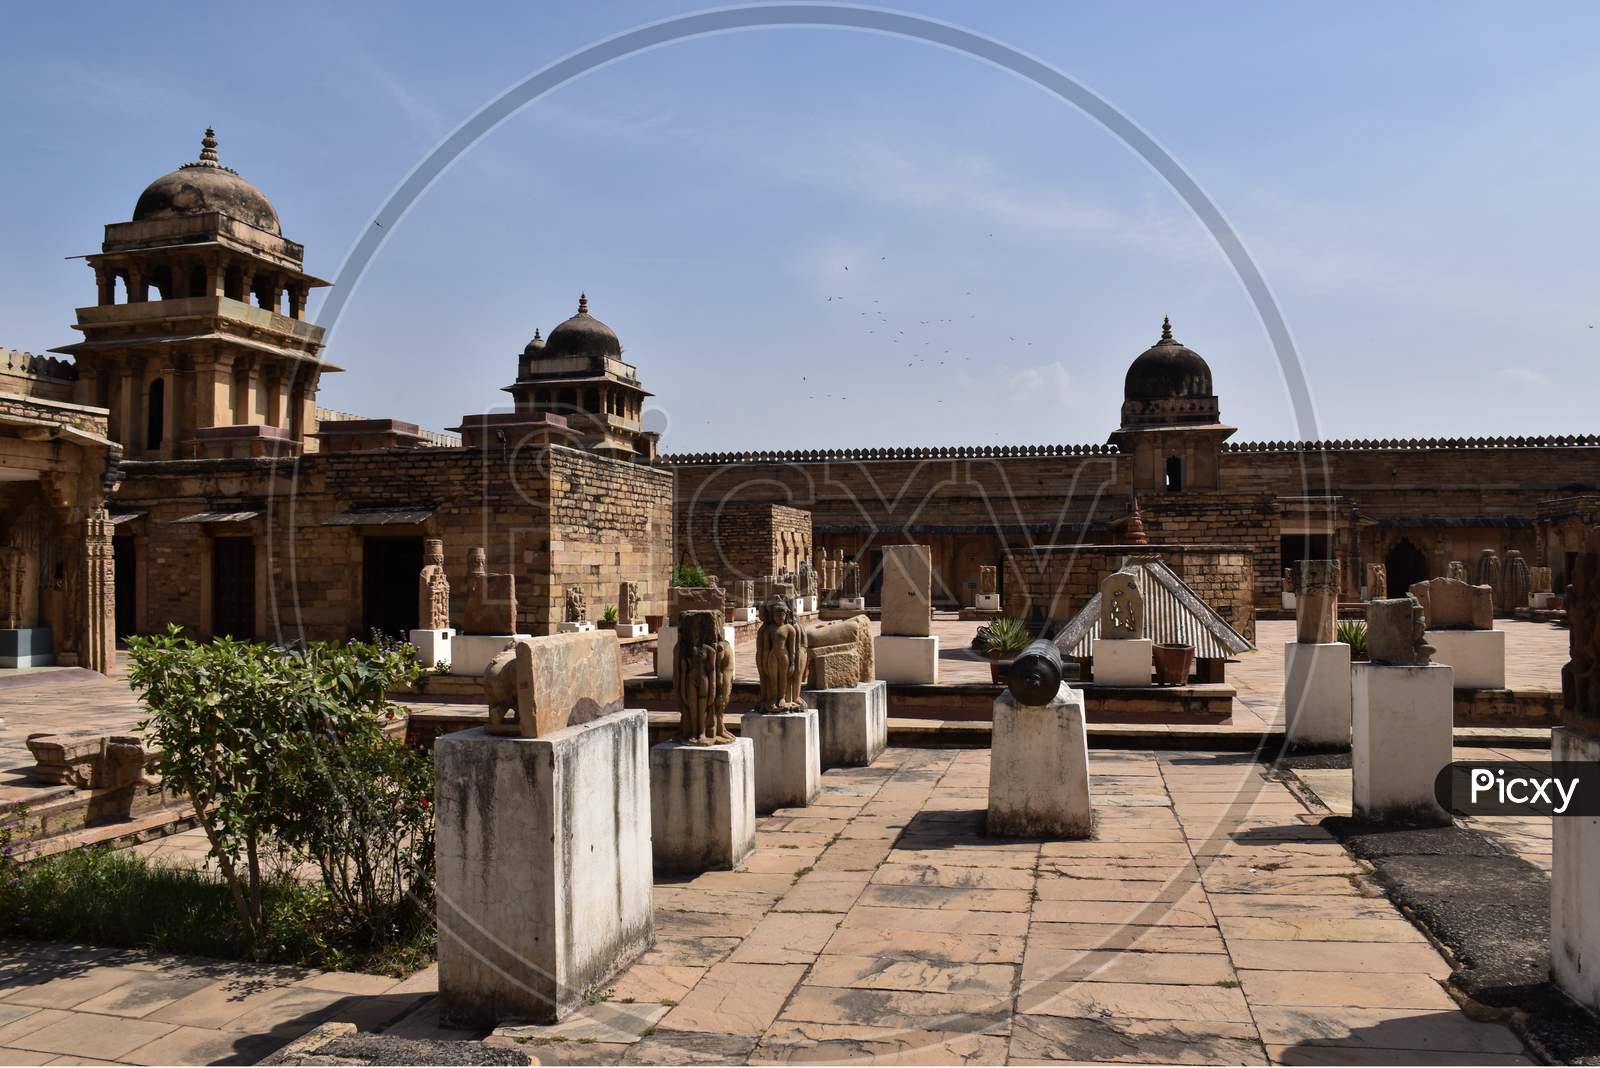 Gwalior, Madhya Pradesh/India : March 15, 2020 - 'Gujari Mahal' In Gwalior Fort